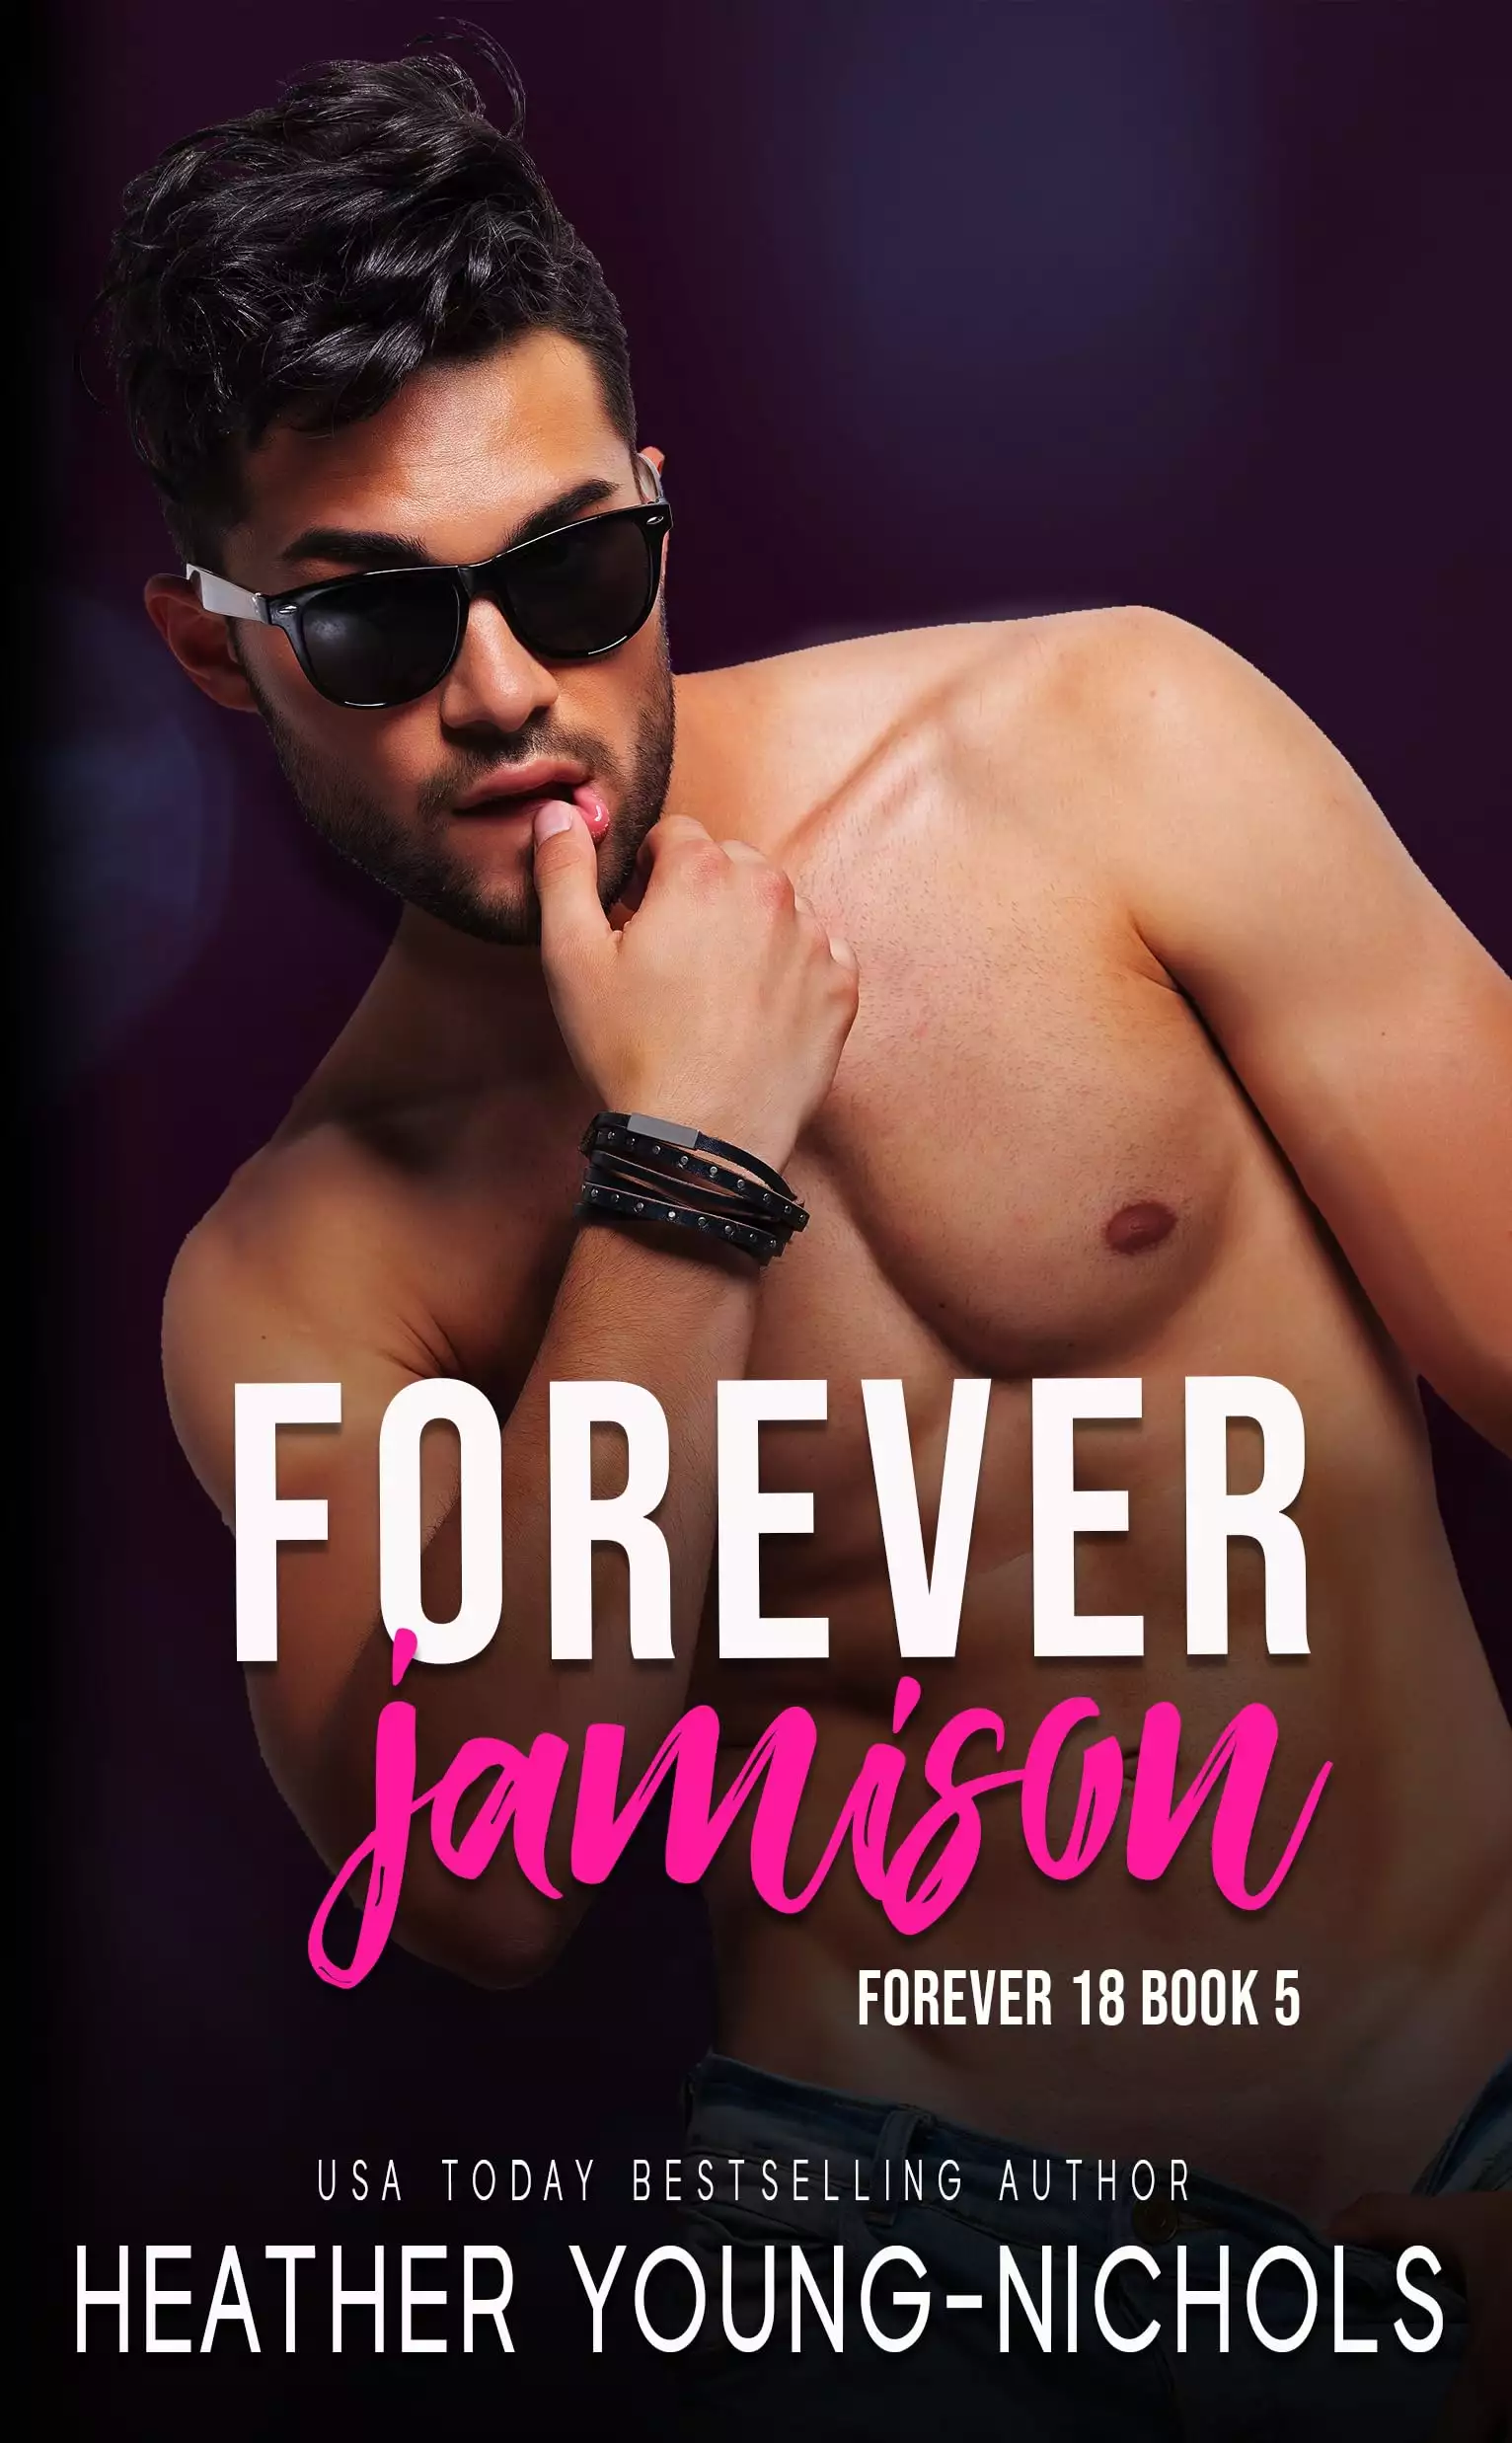 Forever Jamison: A Sworn Off Relationships Rockstar Romance